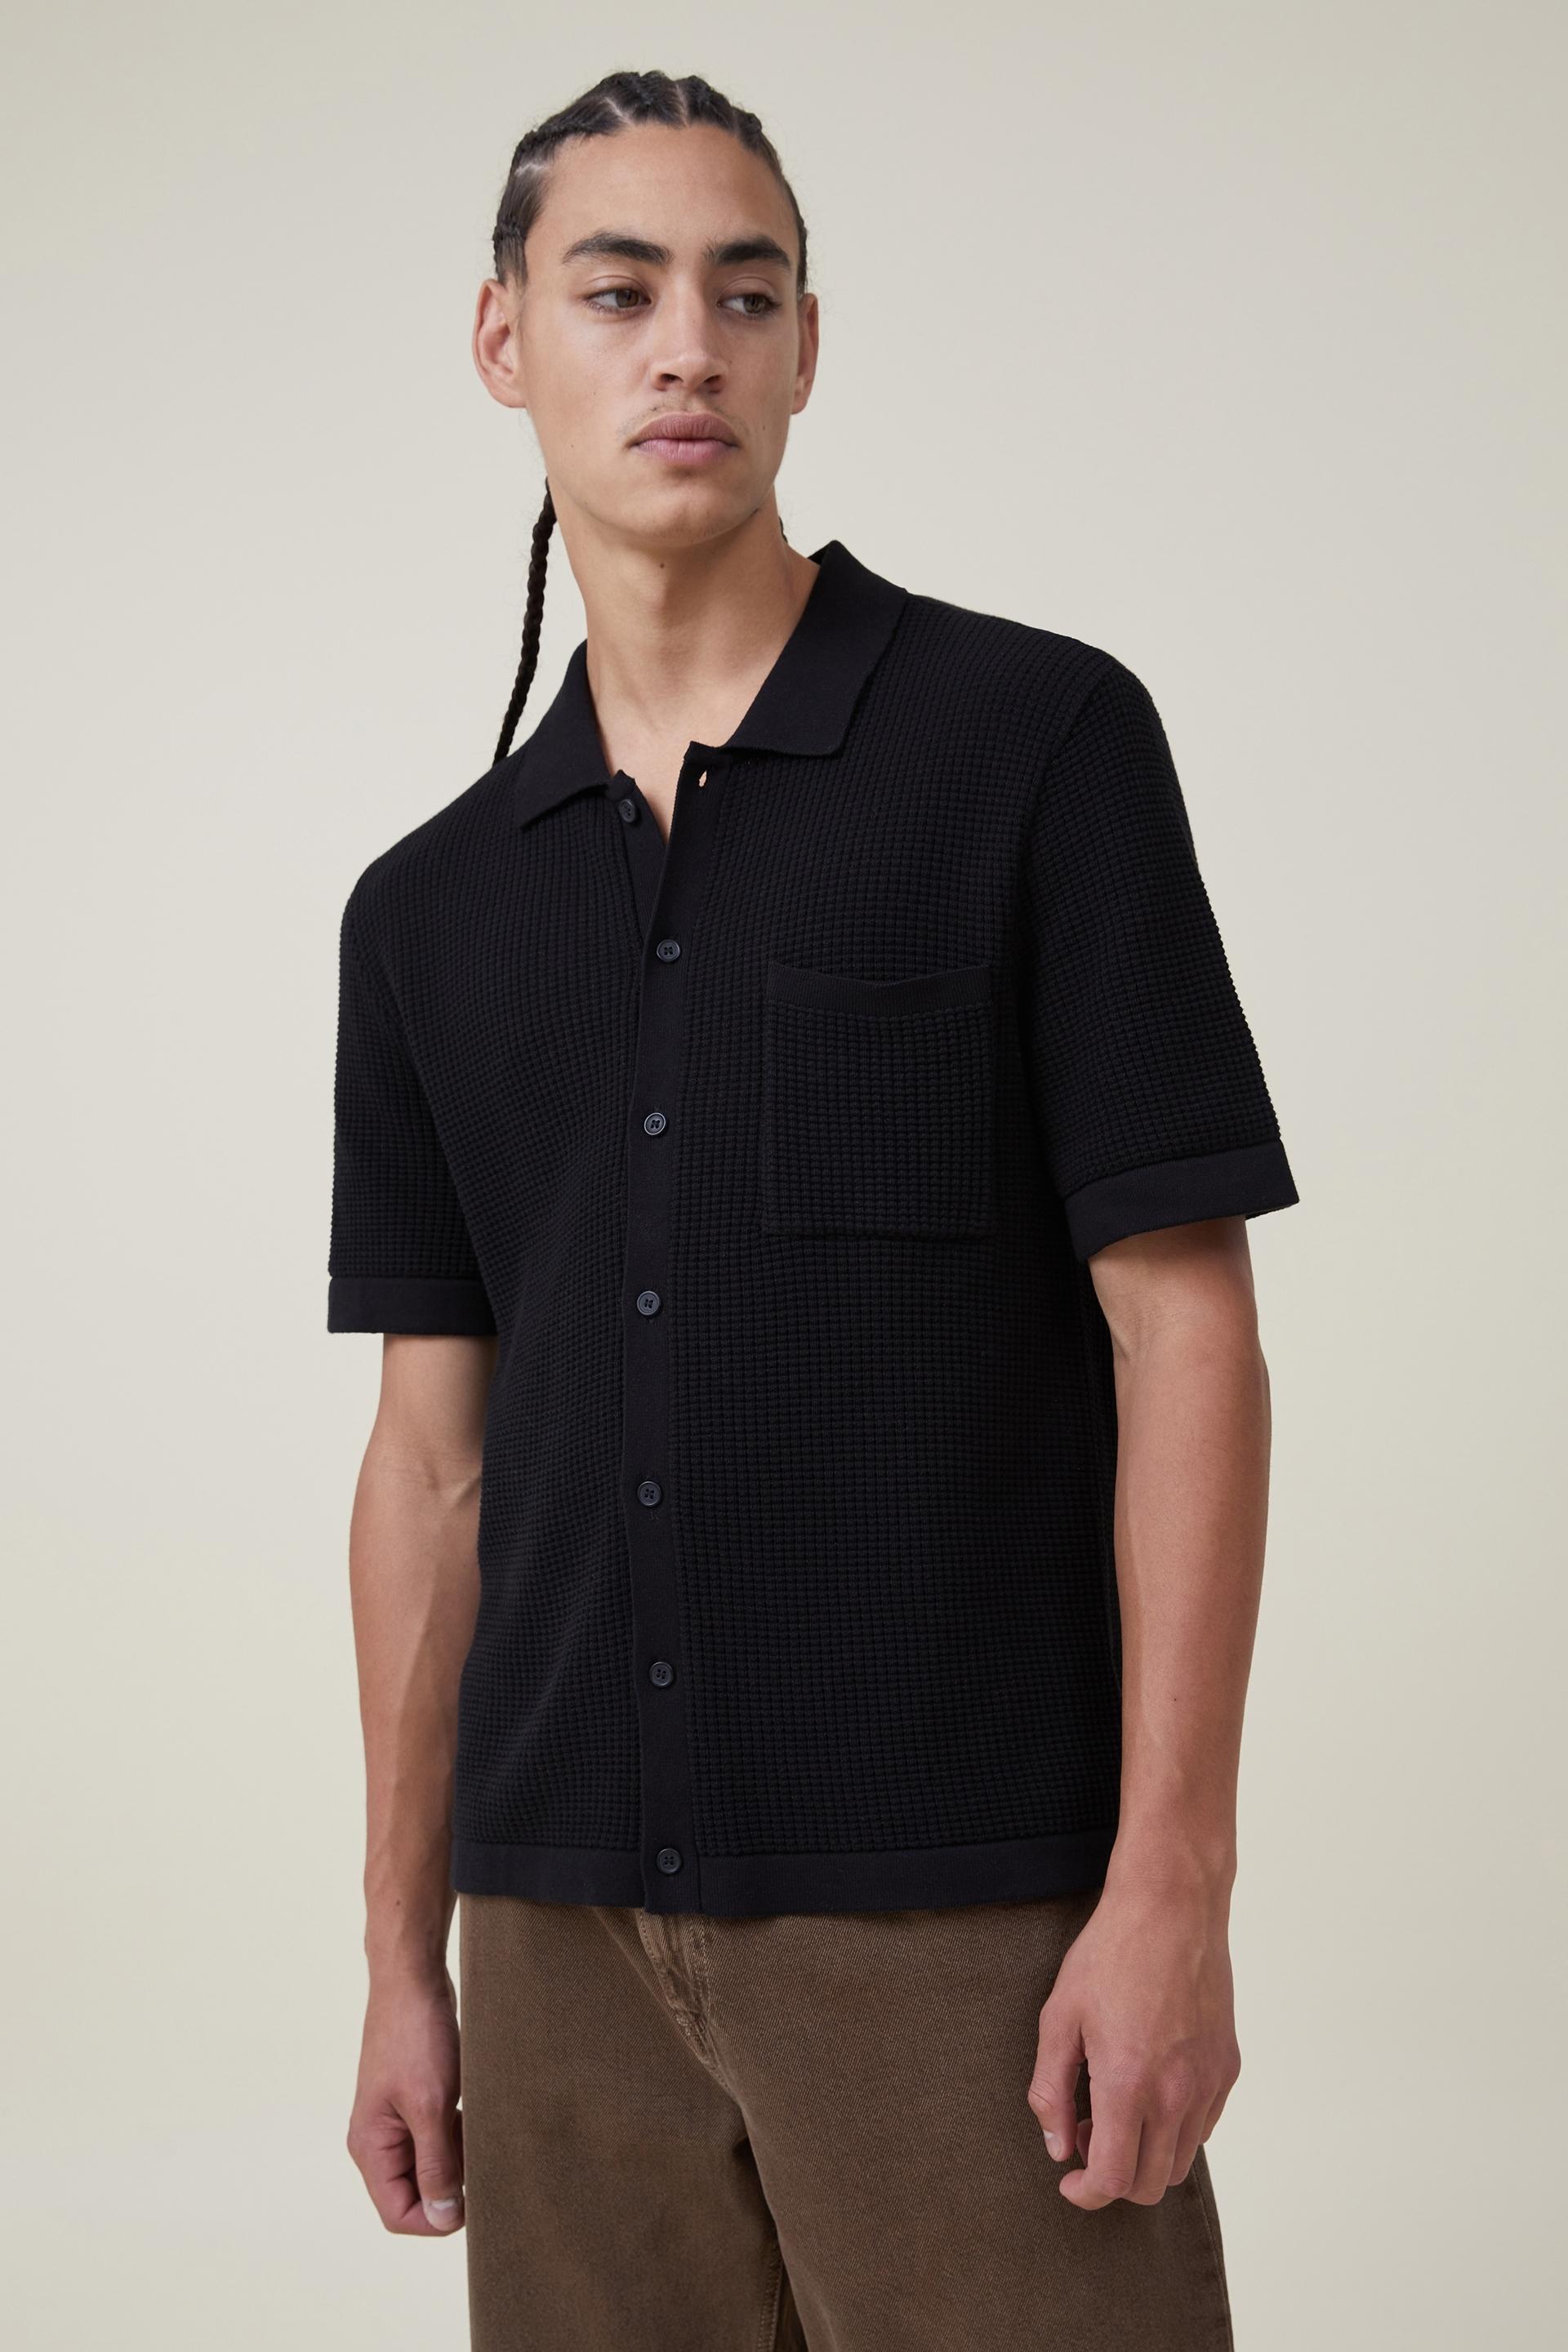 Pablo short sleeve shirt - black Cotton On Shirts | Superbalist.com